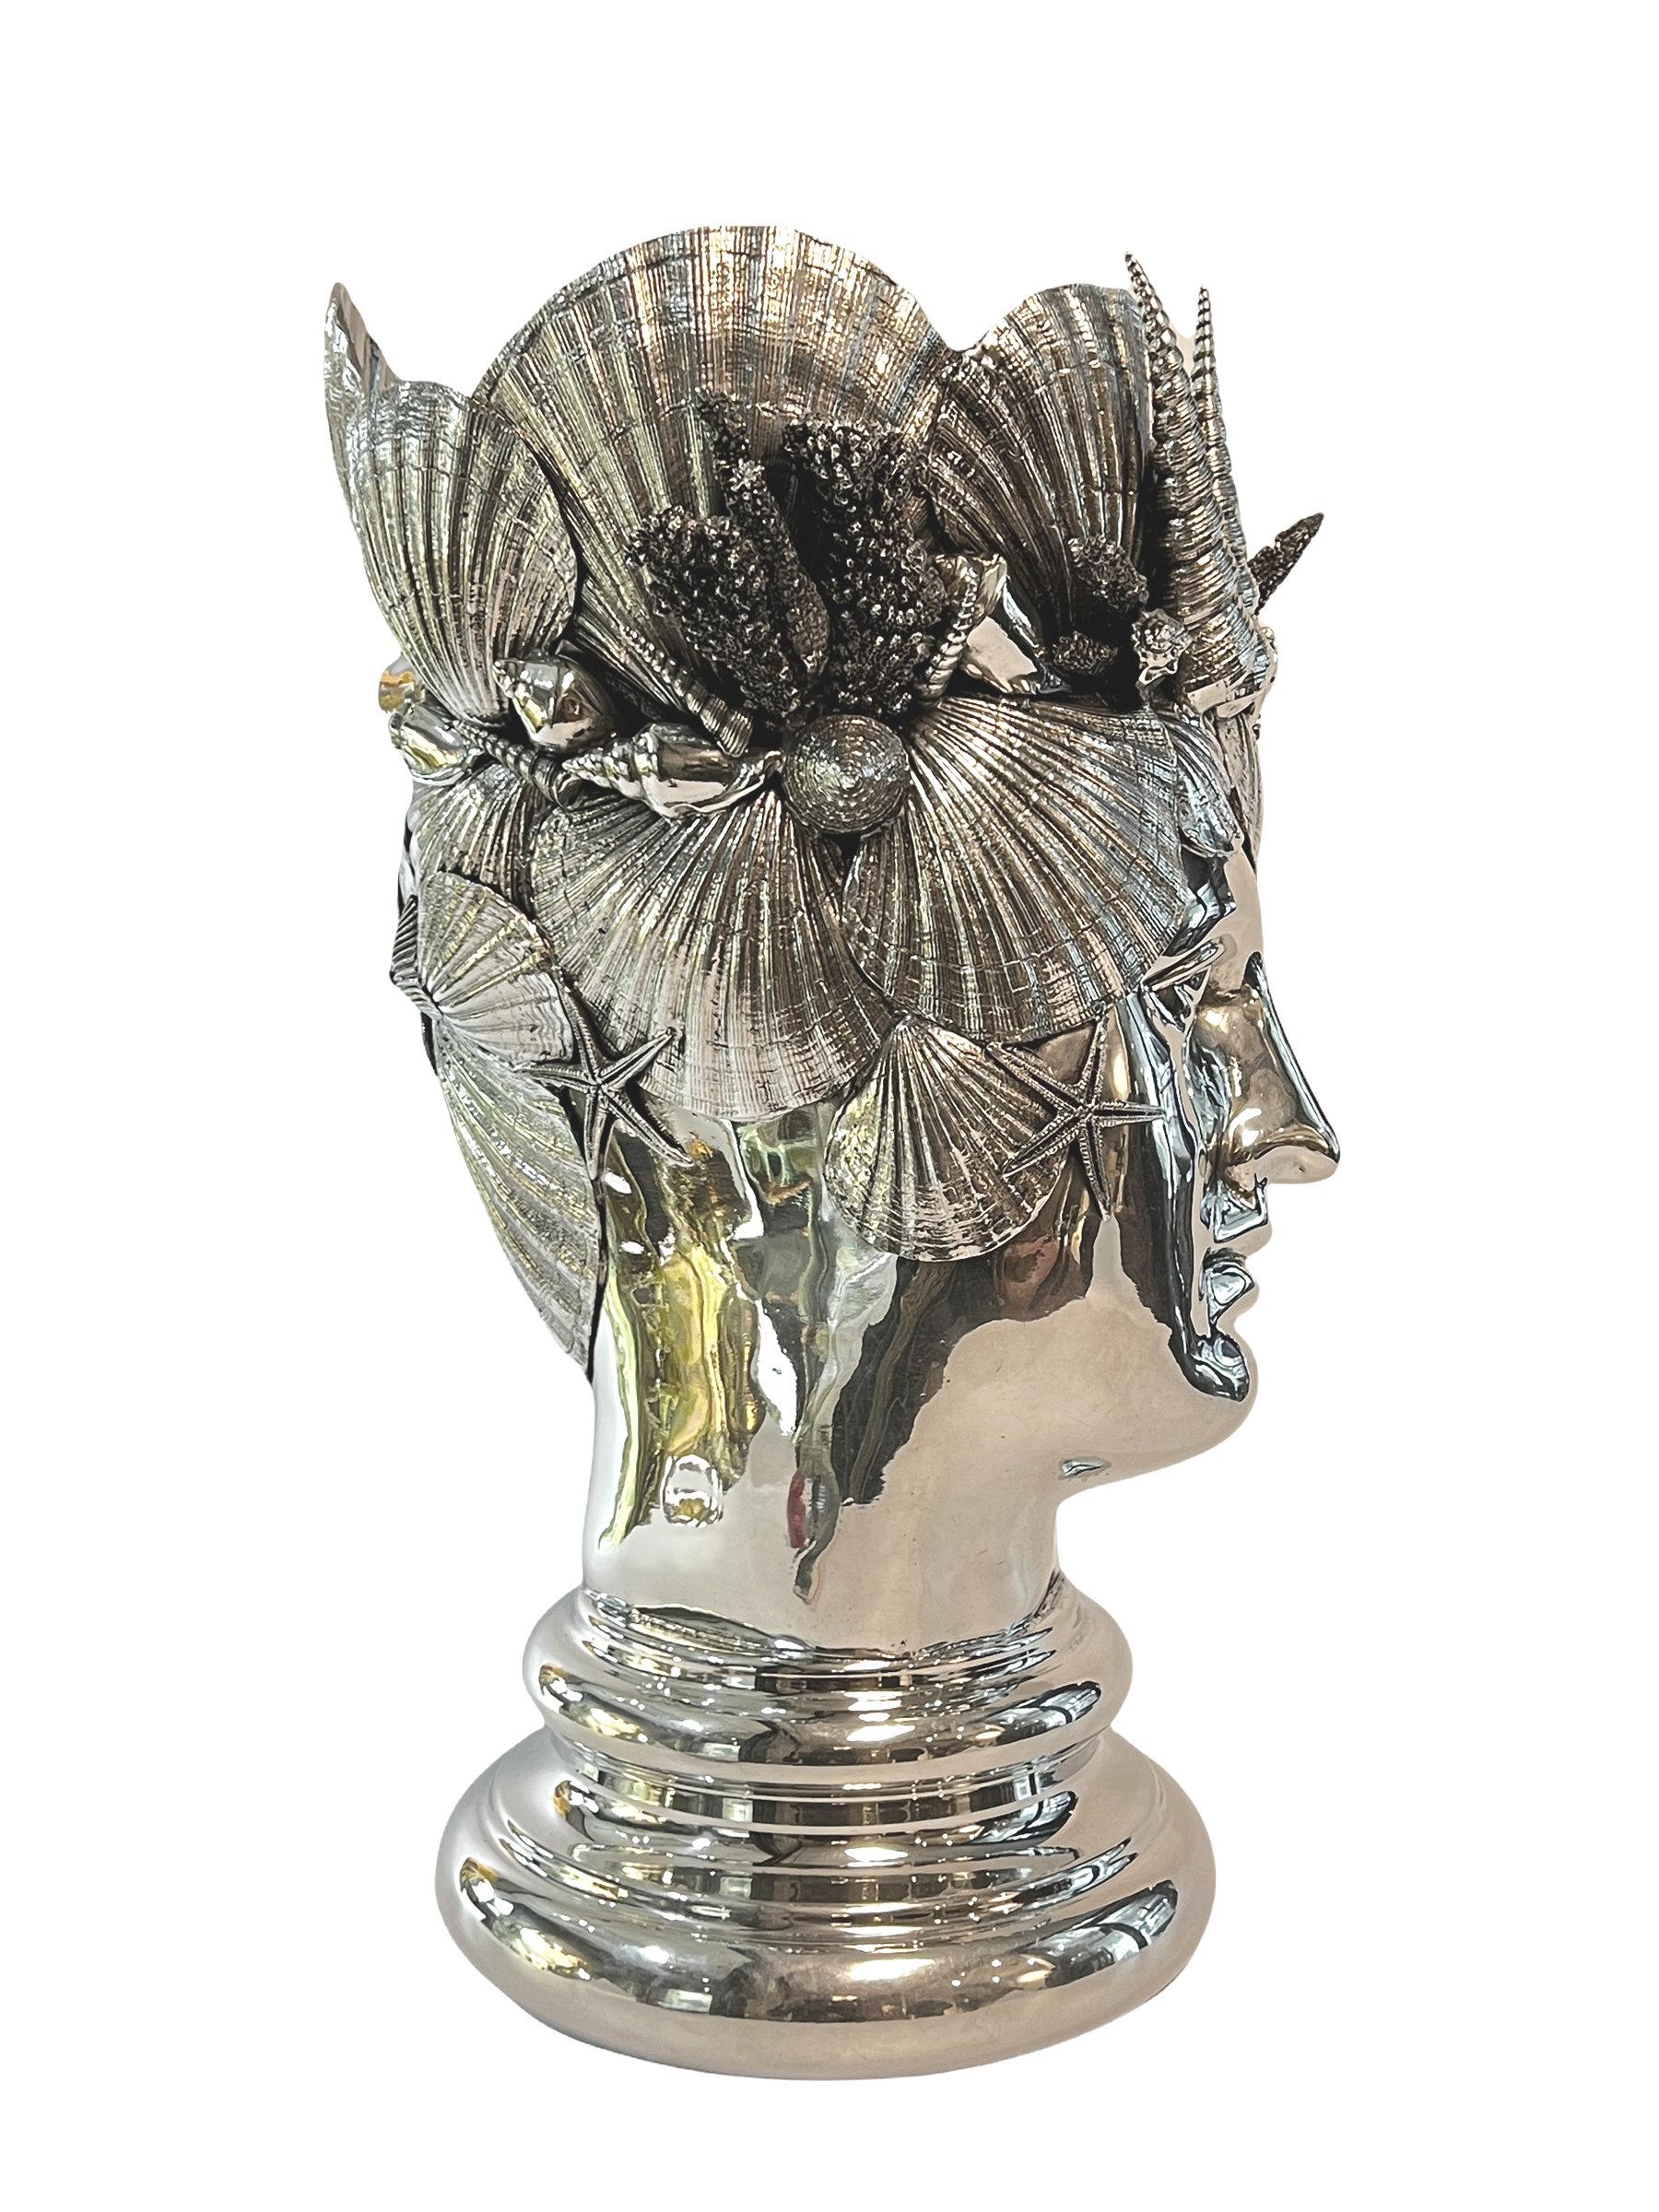 Silvered Italian Silver Plated Figural Wine Cooler Depicting Poseidon / Neptune